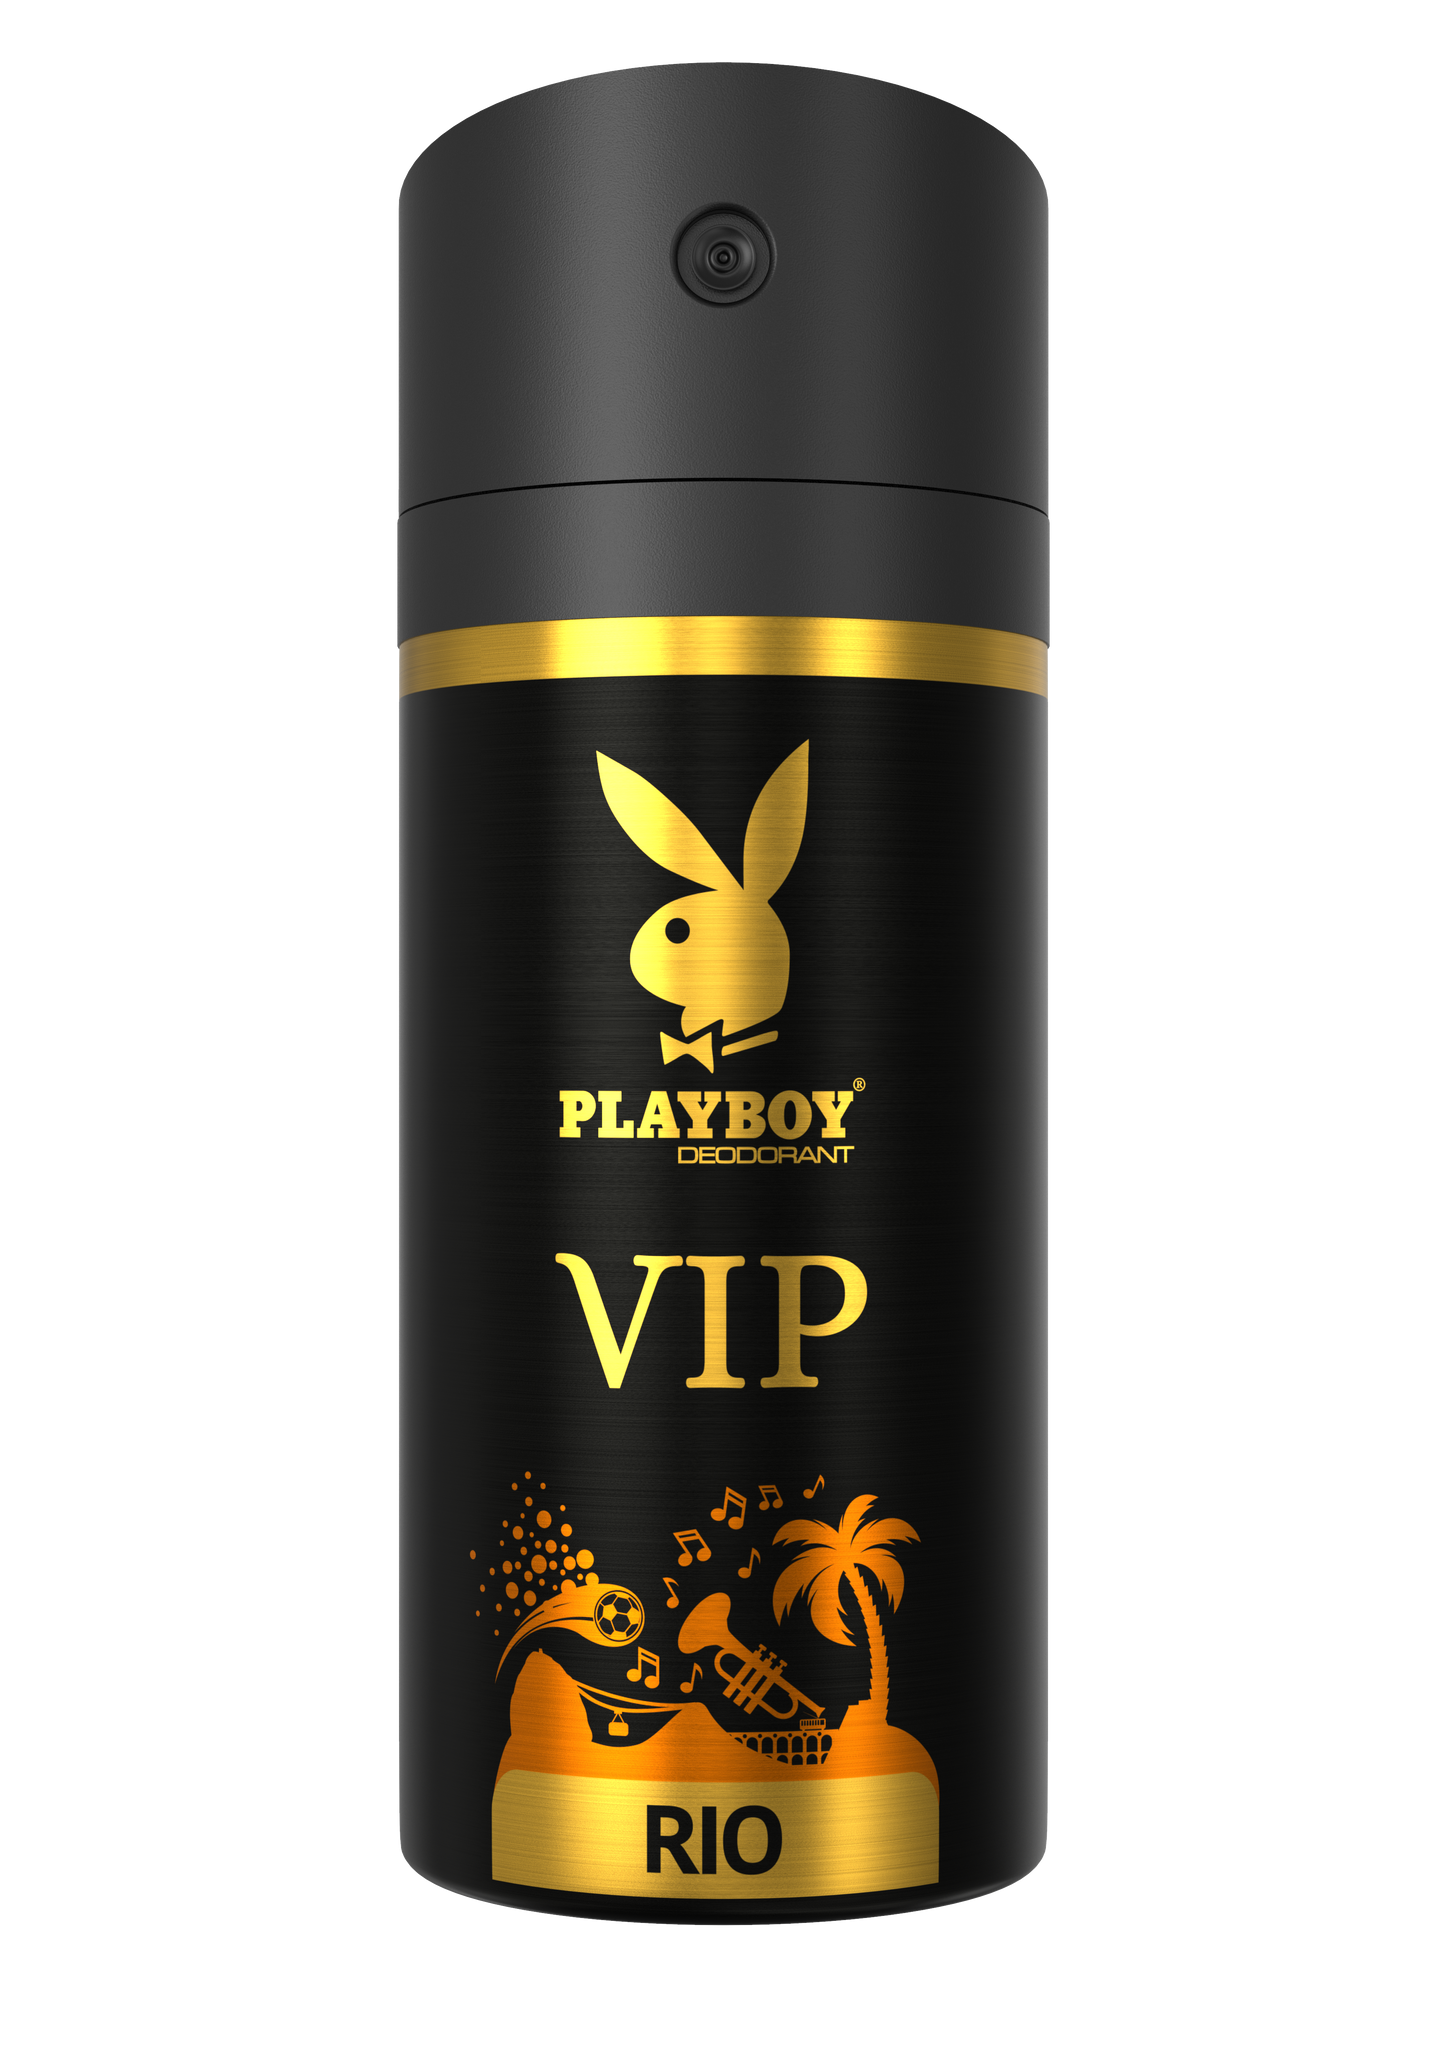 Playboy VIP Rio Deodorant - 150ml - 36 Pack